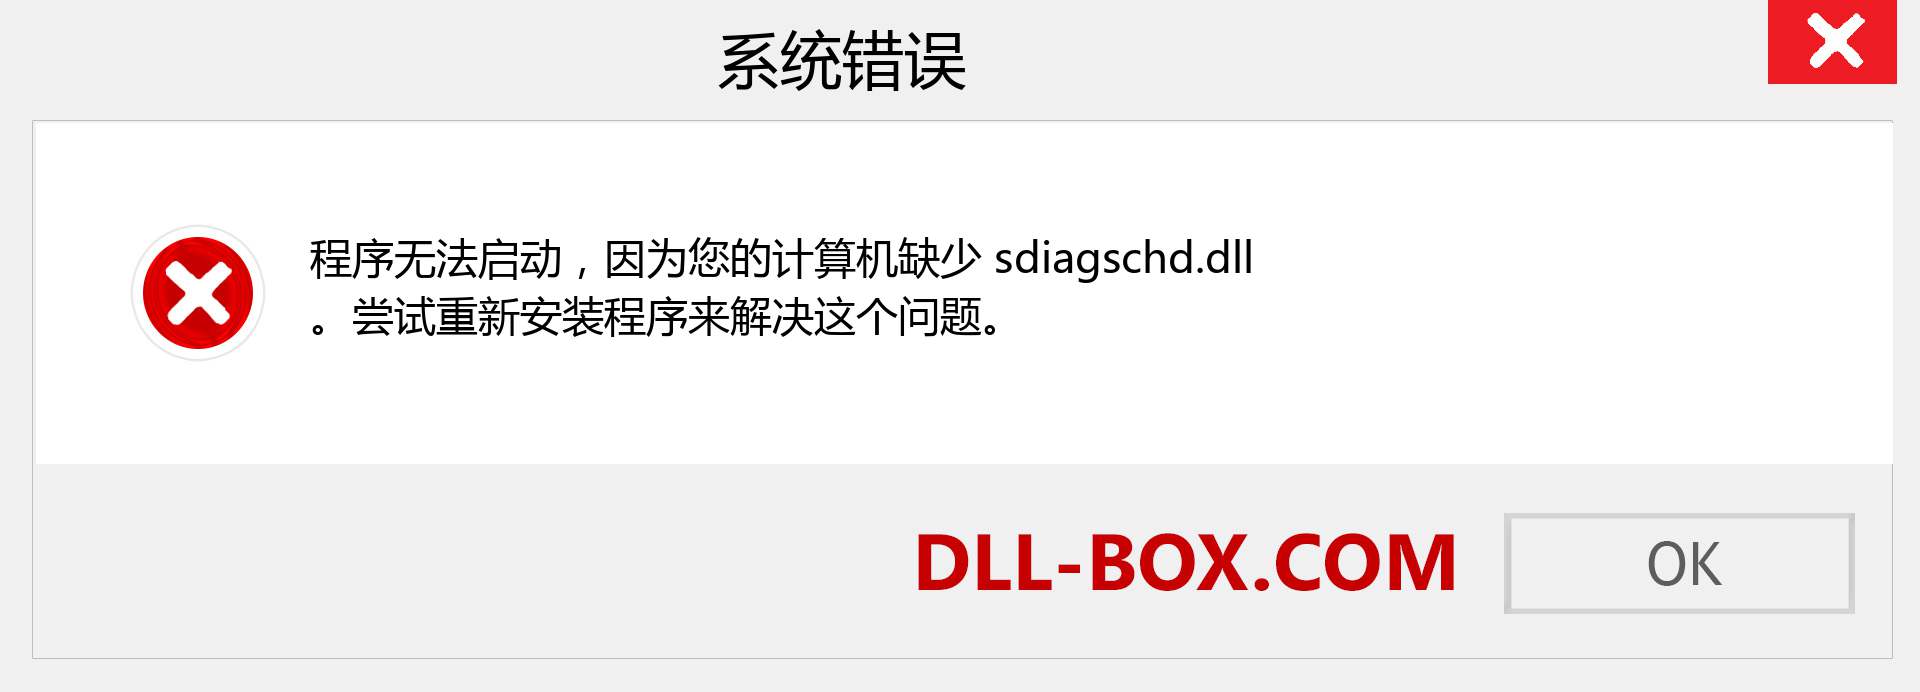 sdiagschd.dll 文件丢失？。 适用于 Windows 7、8、10 的下载 - 修复 Windows、照片、图像上的 sdiagschd dll 丢失错误